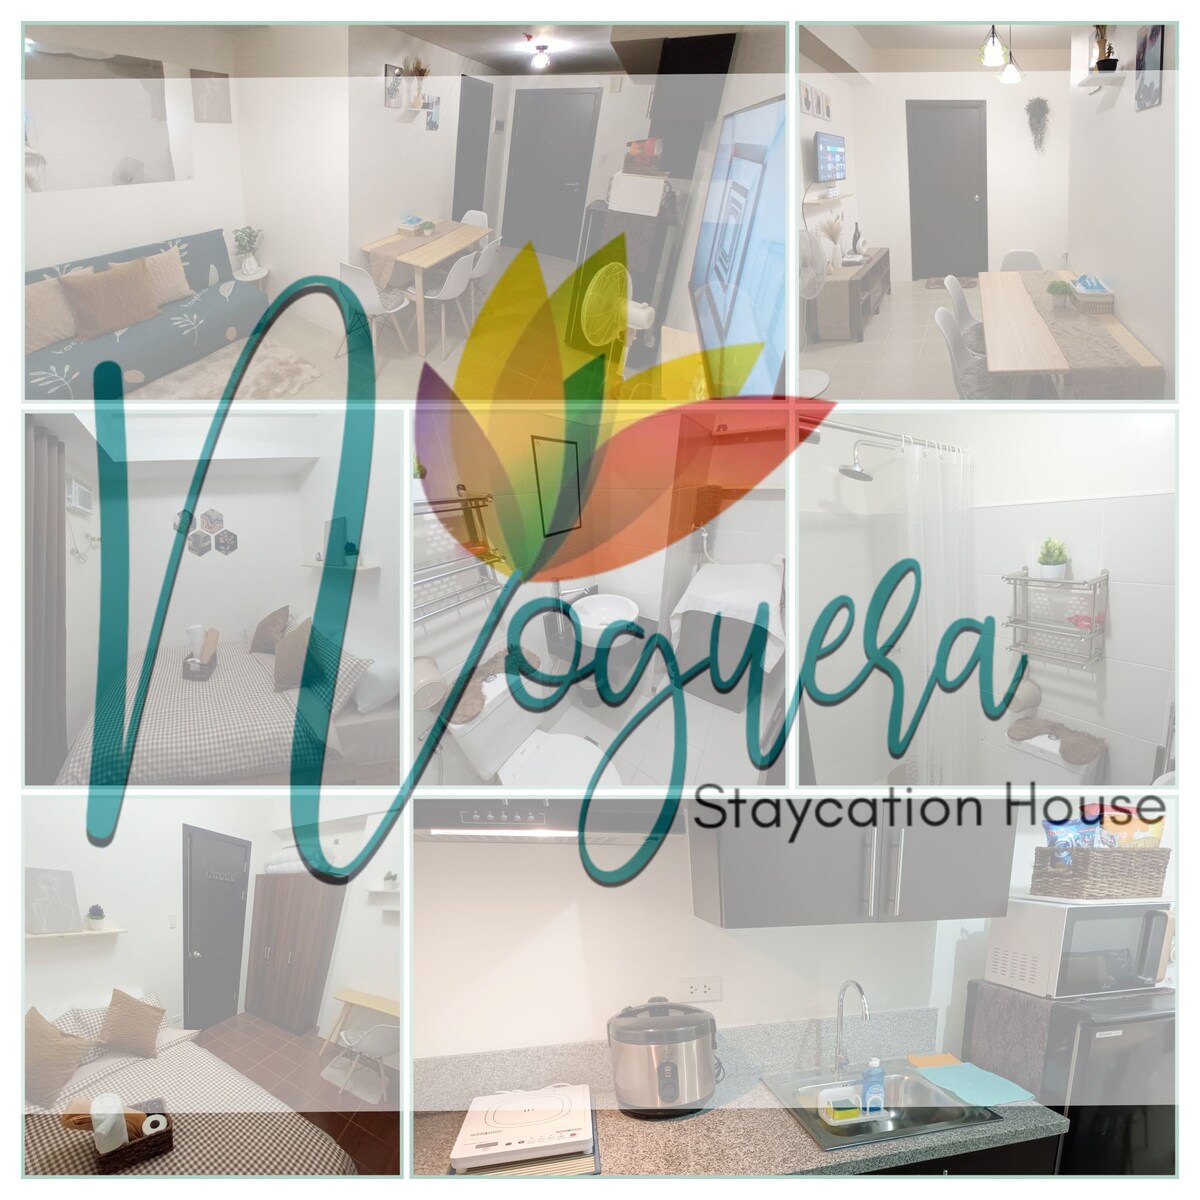 Noguera Staycation House